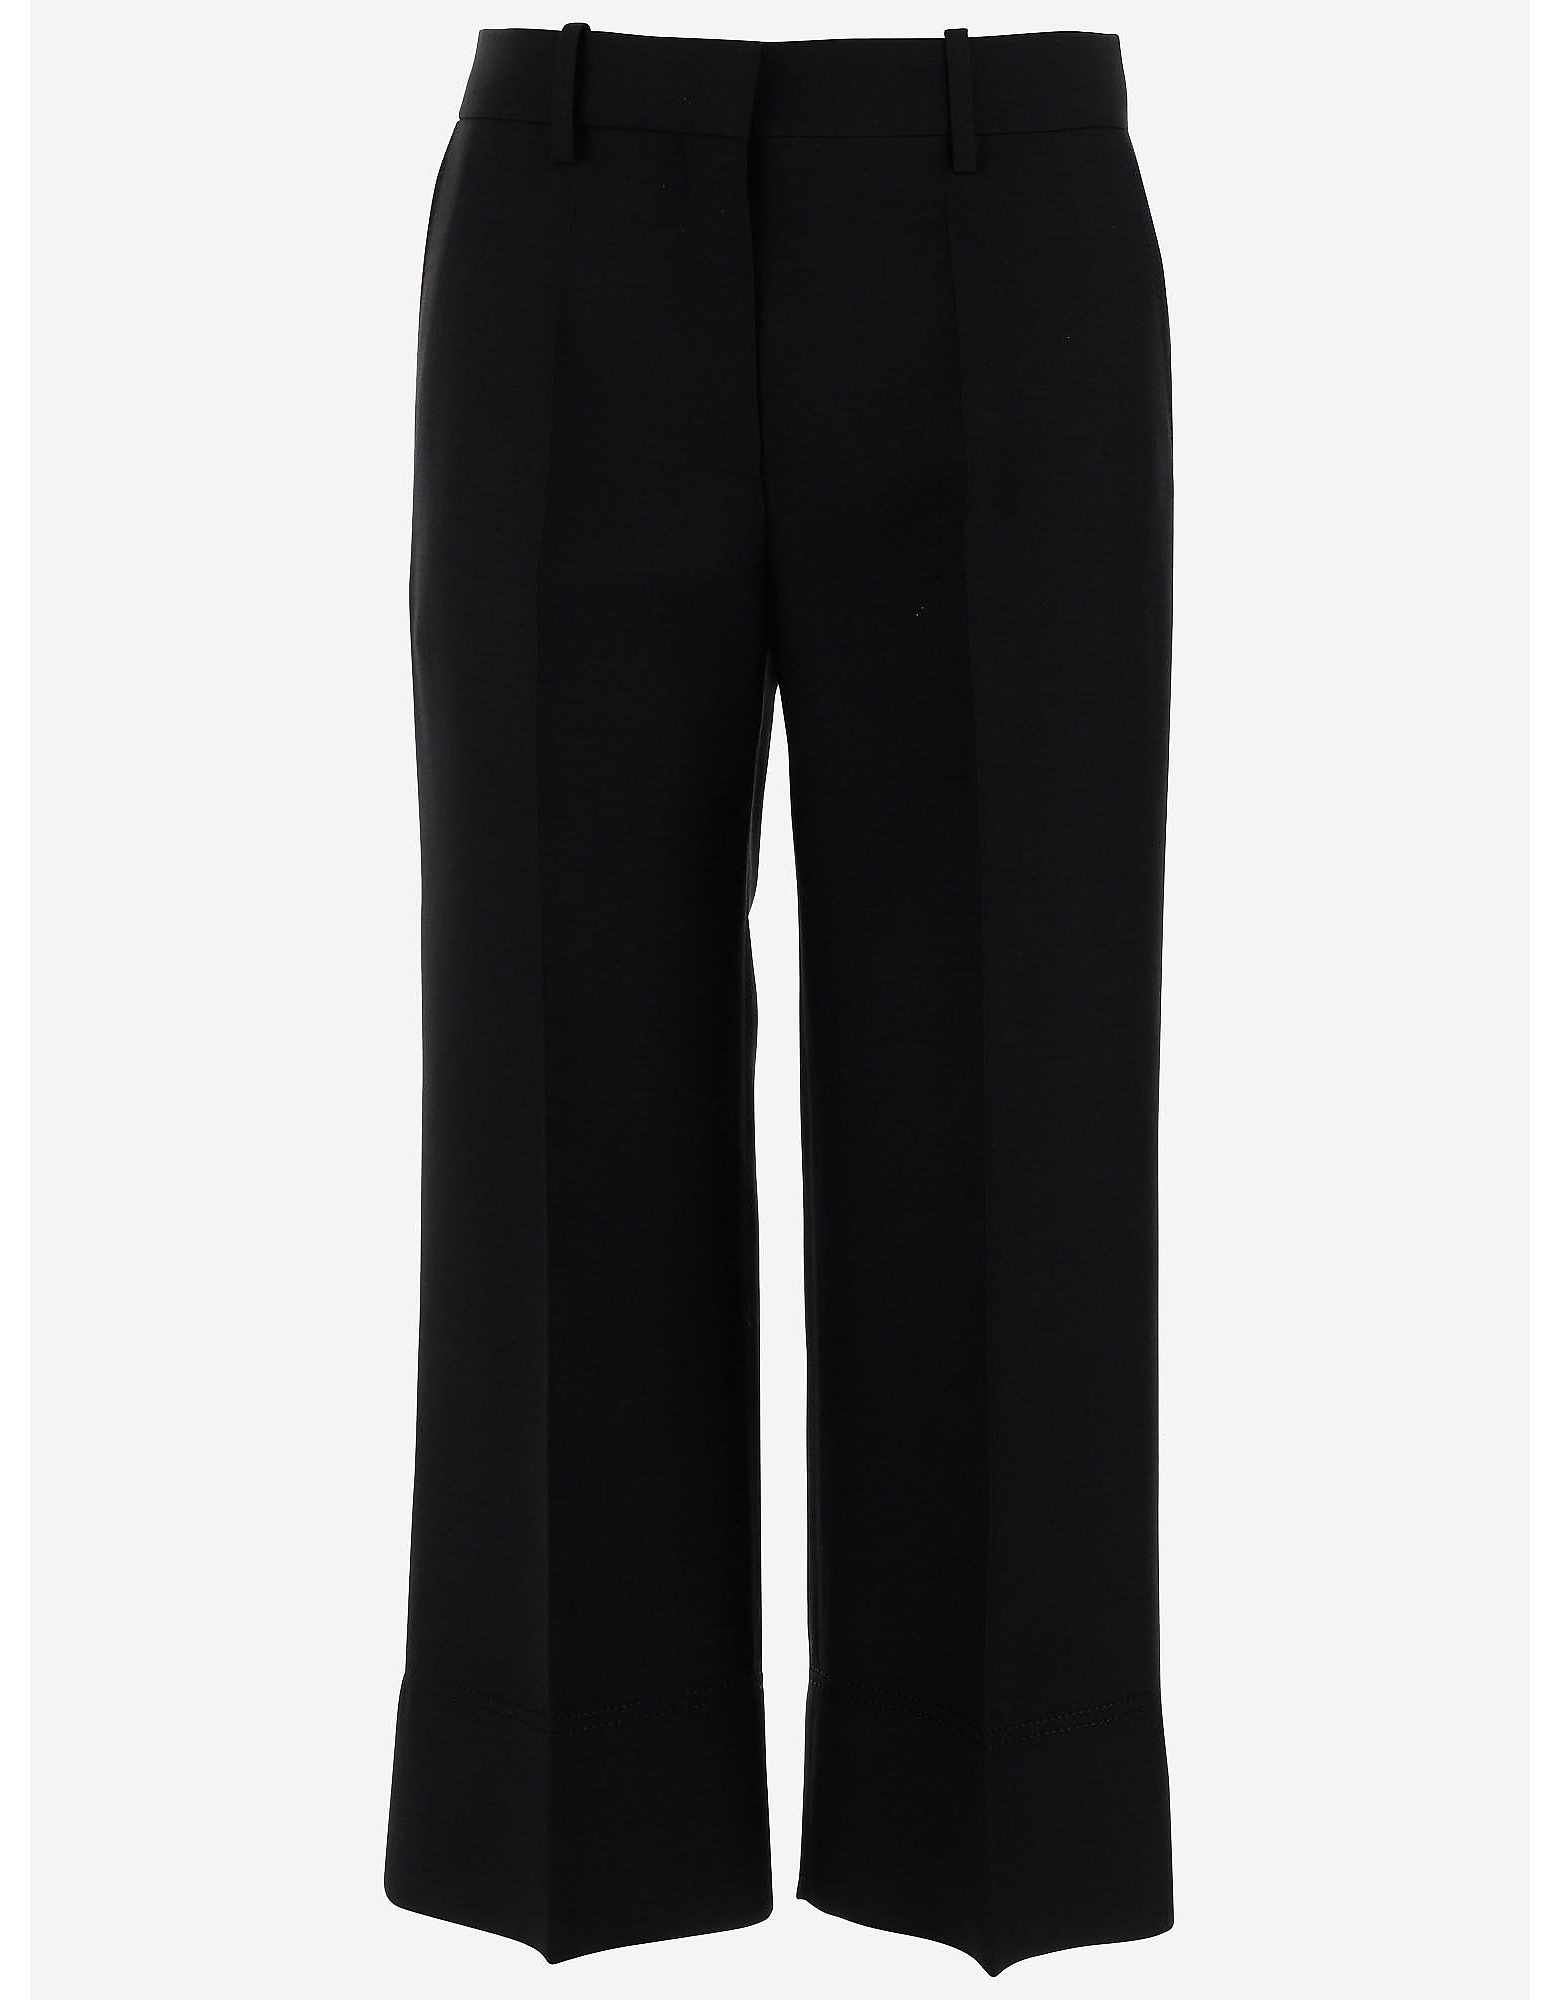 ValentinoValentino Designer Pants, Women's Straight Pants | DailyMail